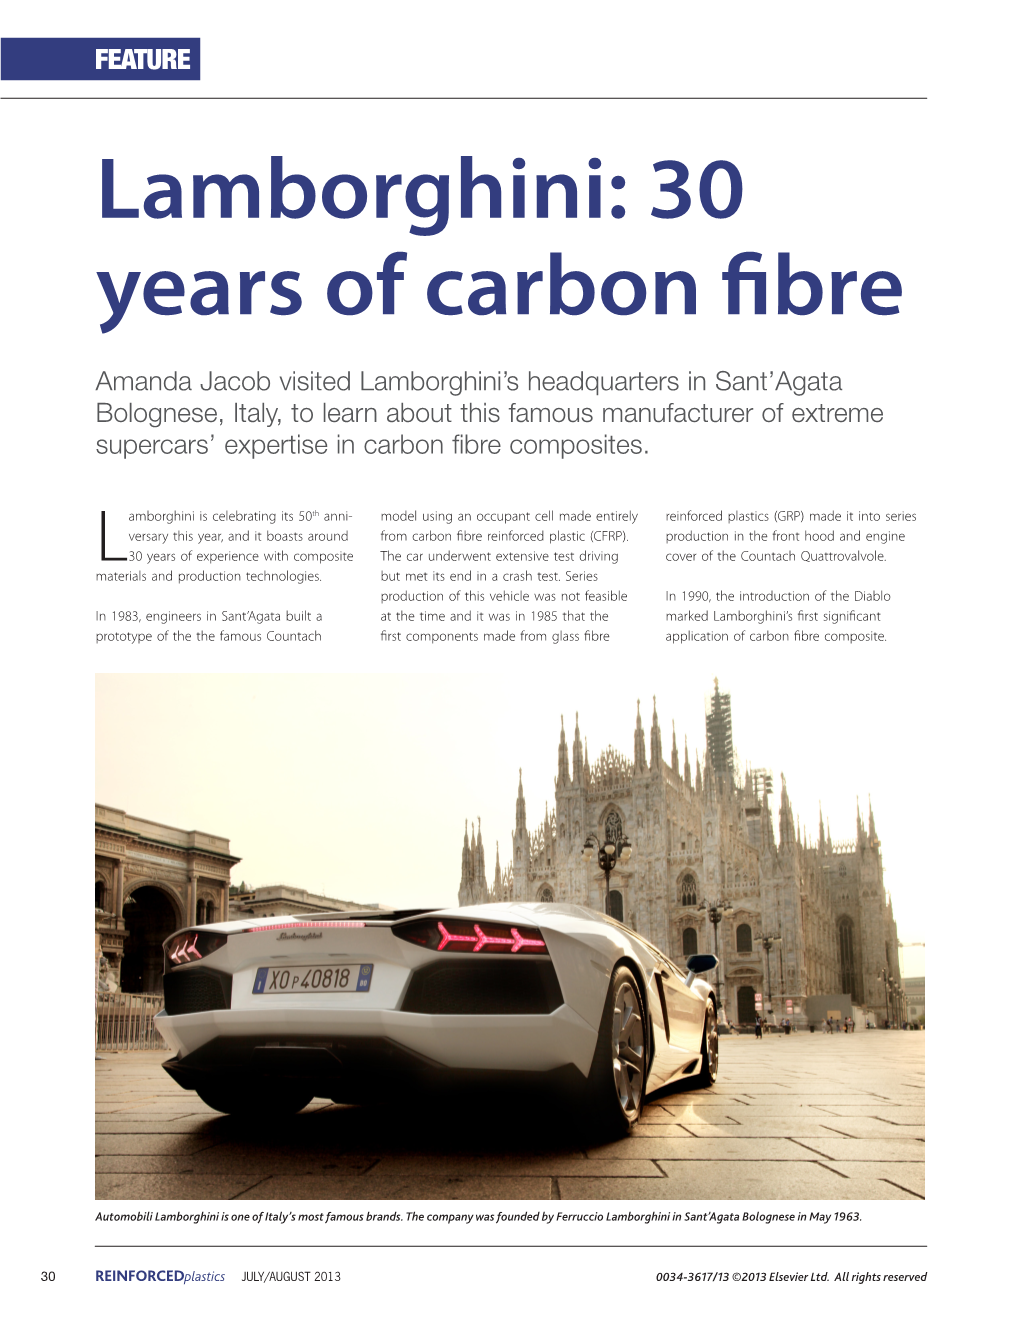 Lamborghini: 30 Years of Carbon Fibre